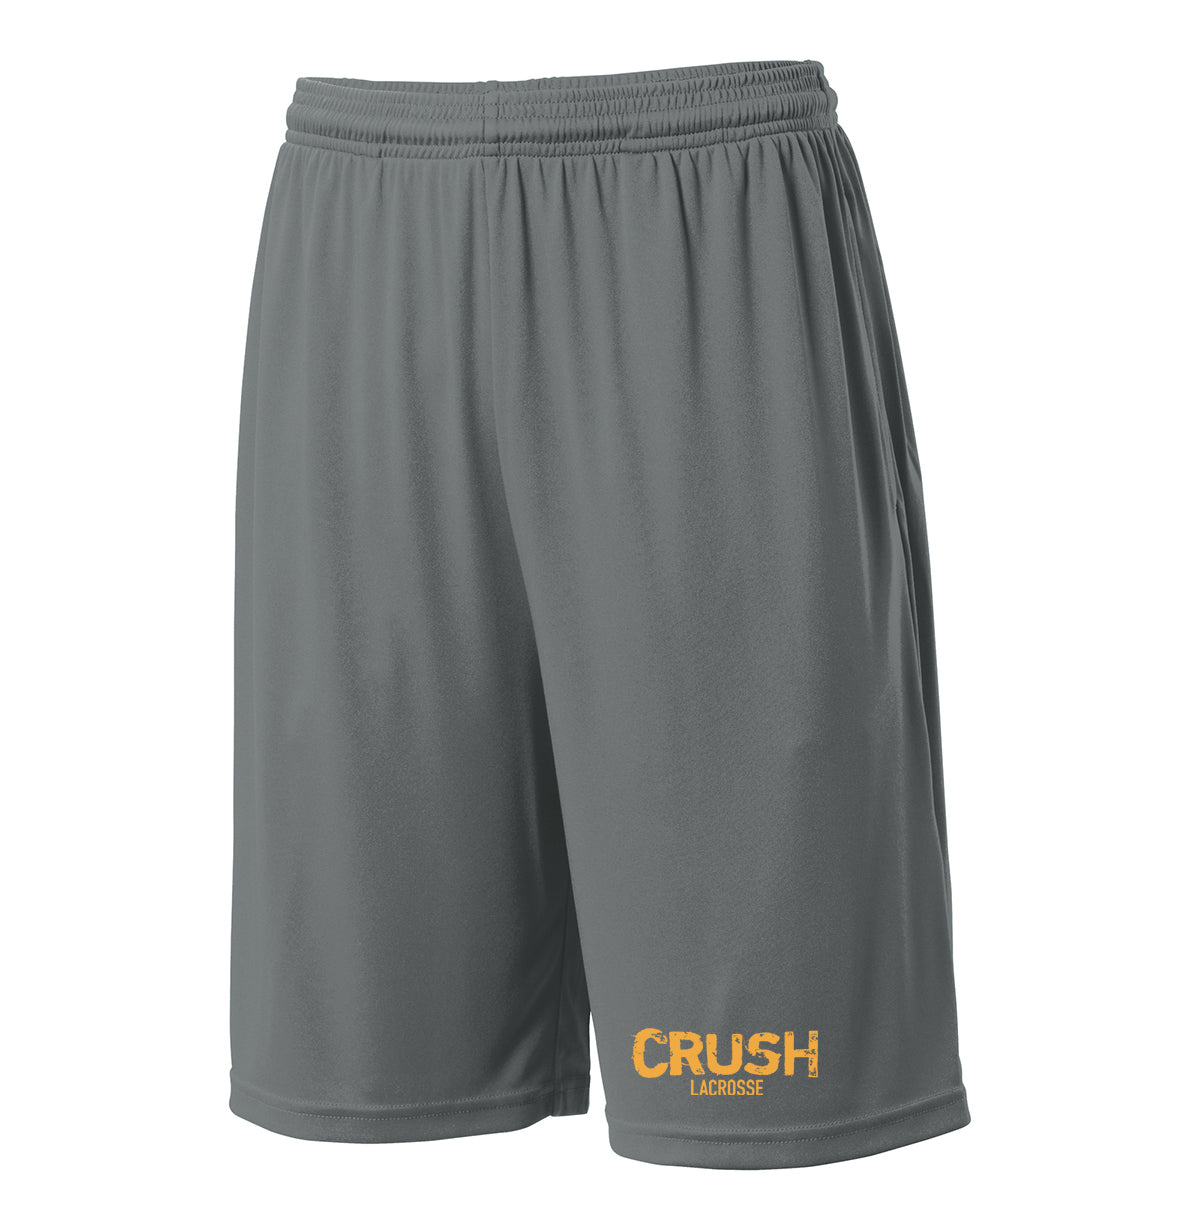 Crush Lacrosse Grey Shorts